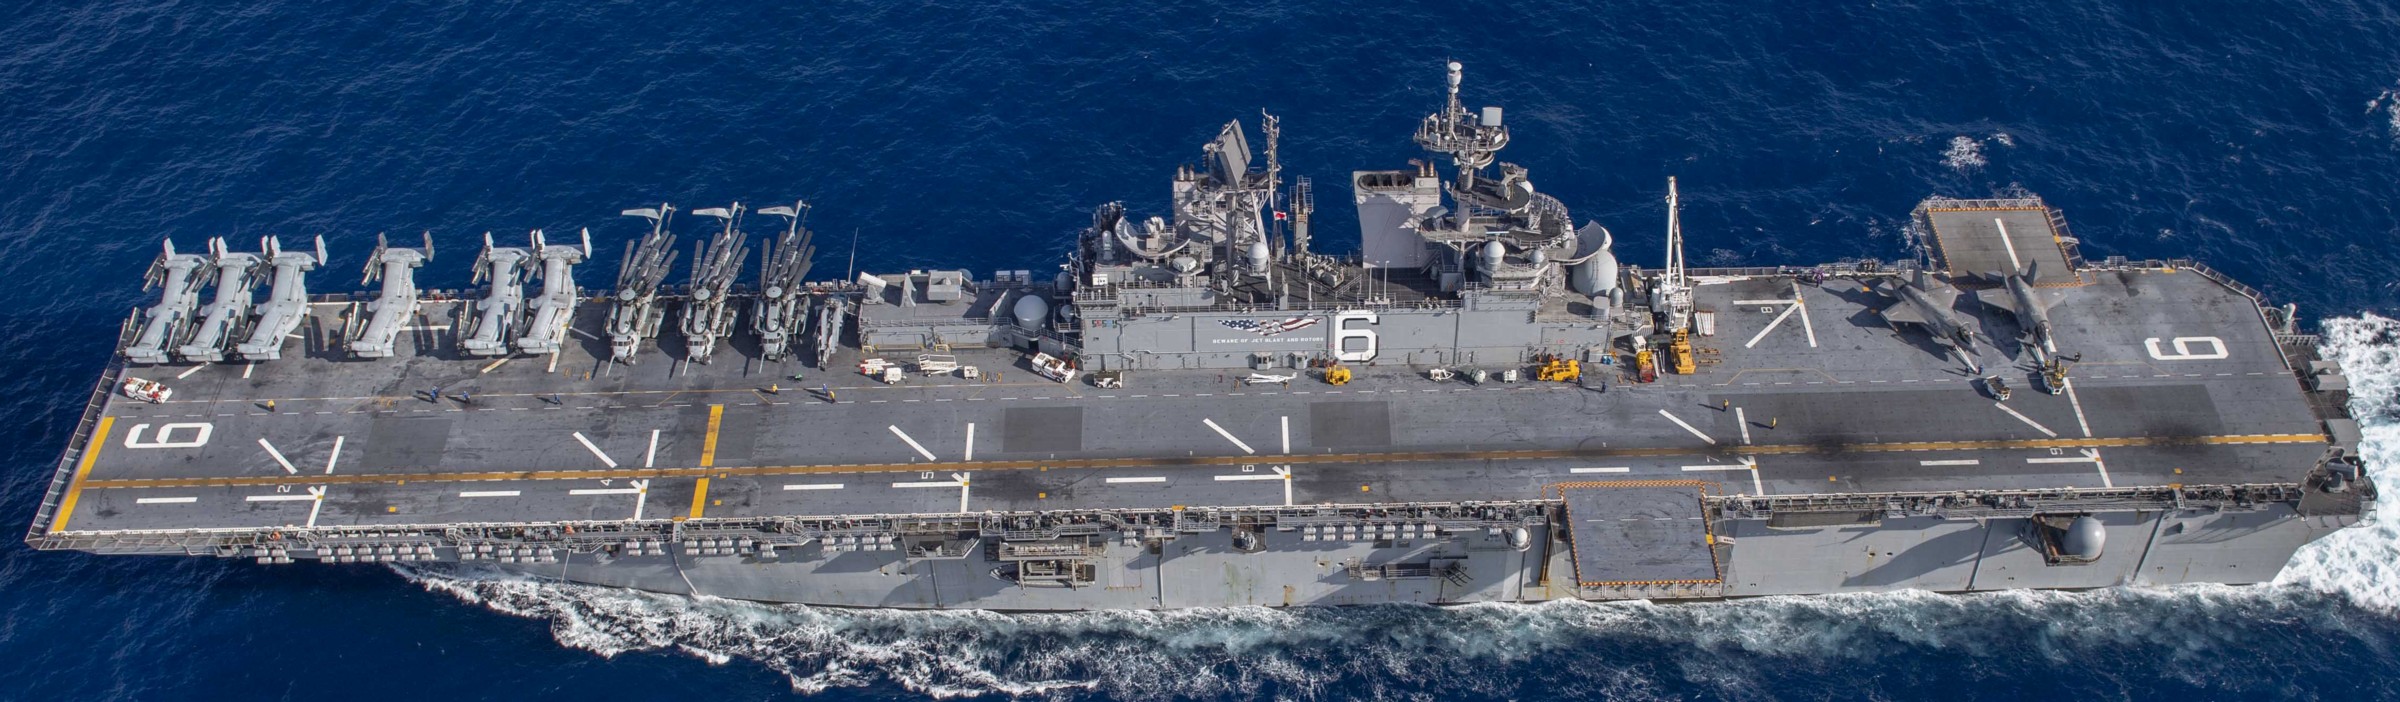 lha-6 uss america amphibious assault ship landing us navy marines vmm-265 164